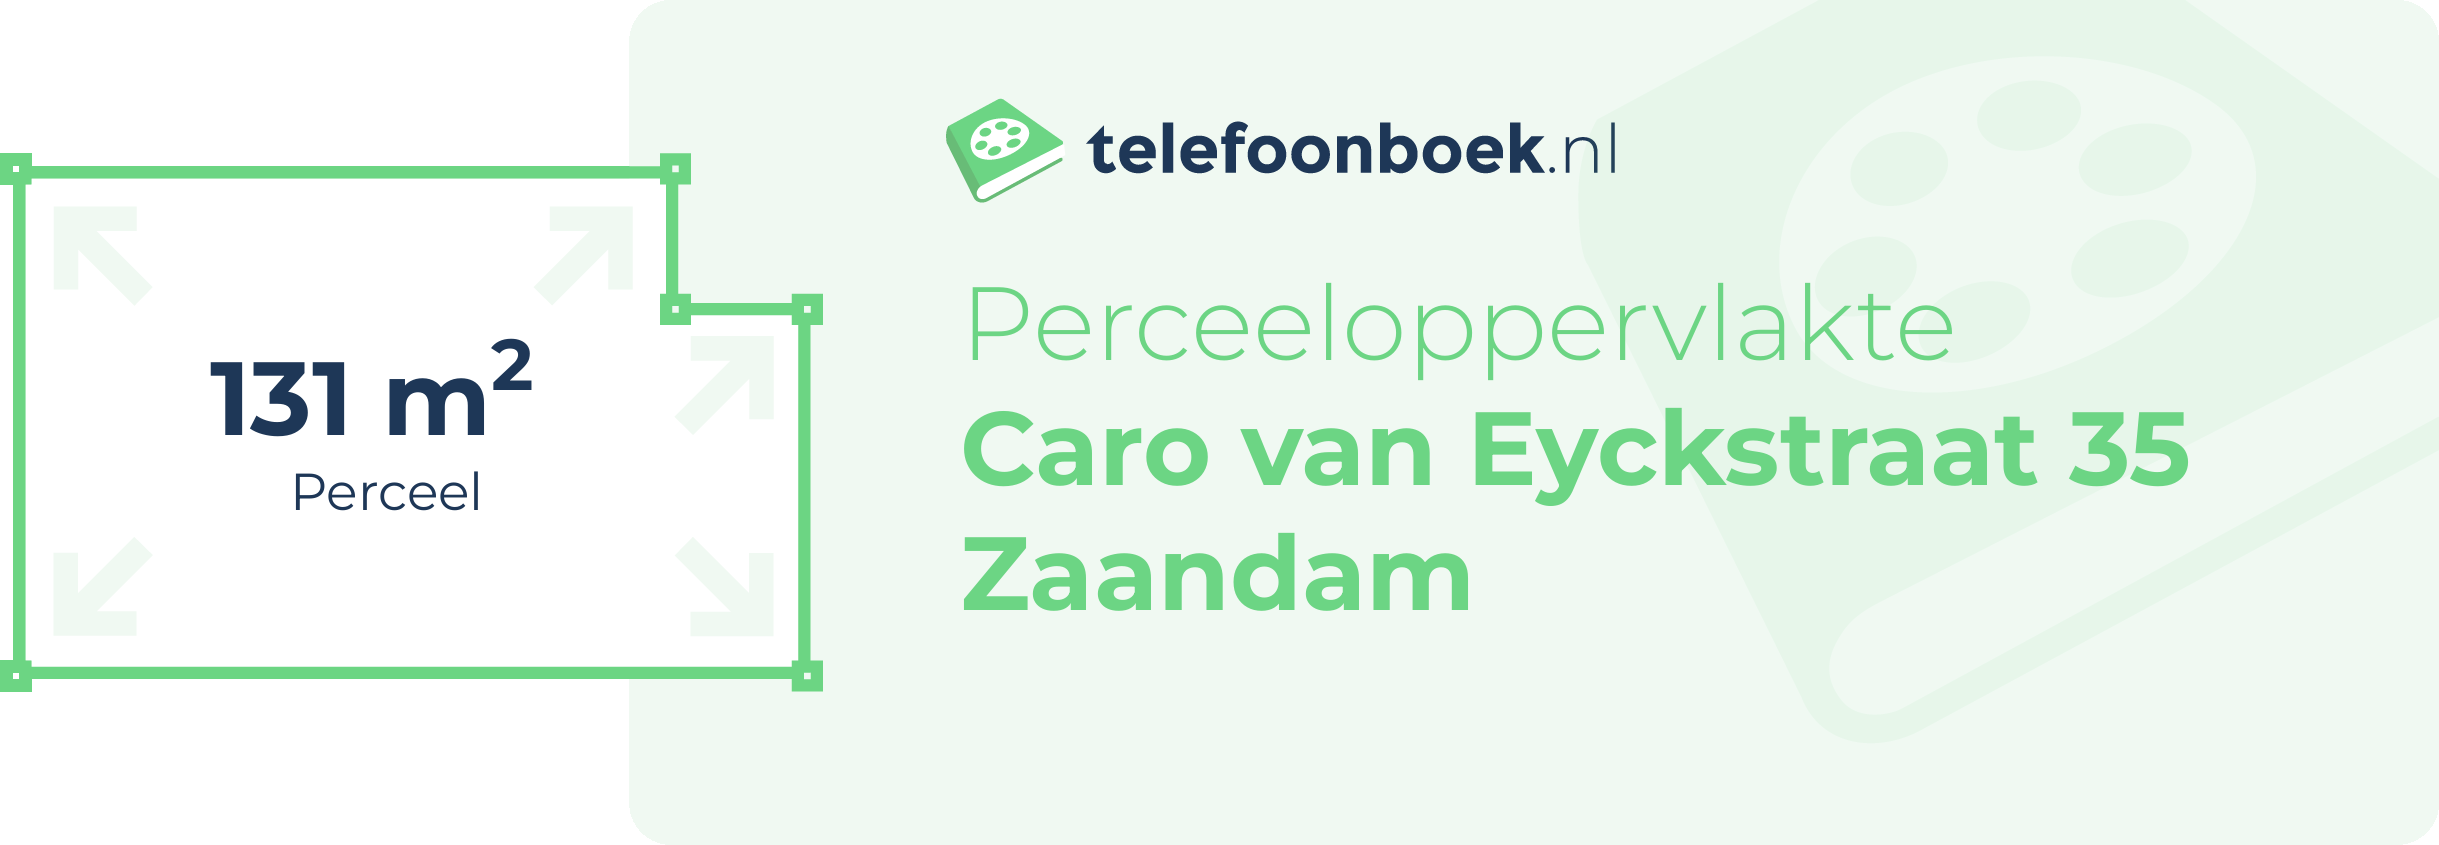 Perceeloppervlakte Caro Van Eyckstraat 35 Zaandam